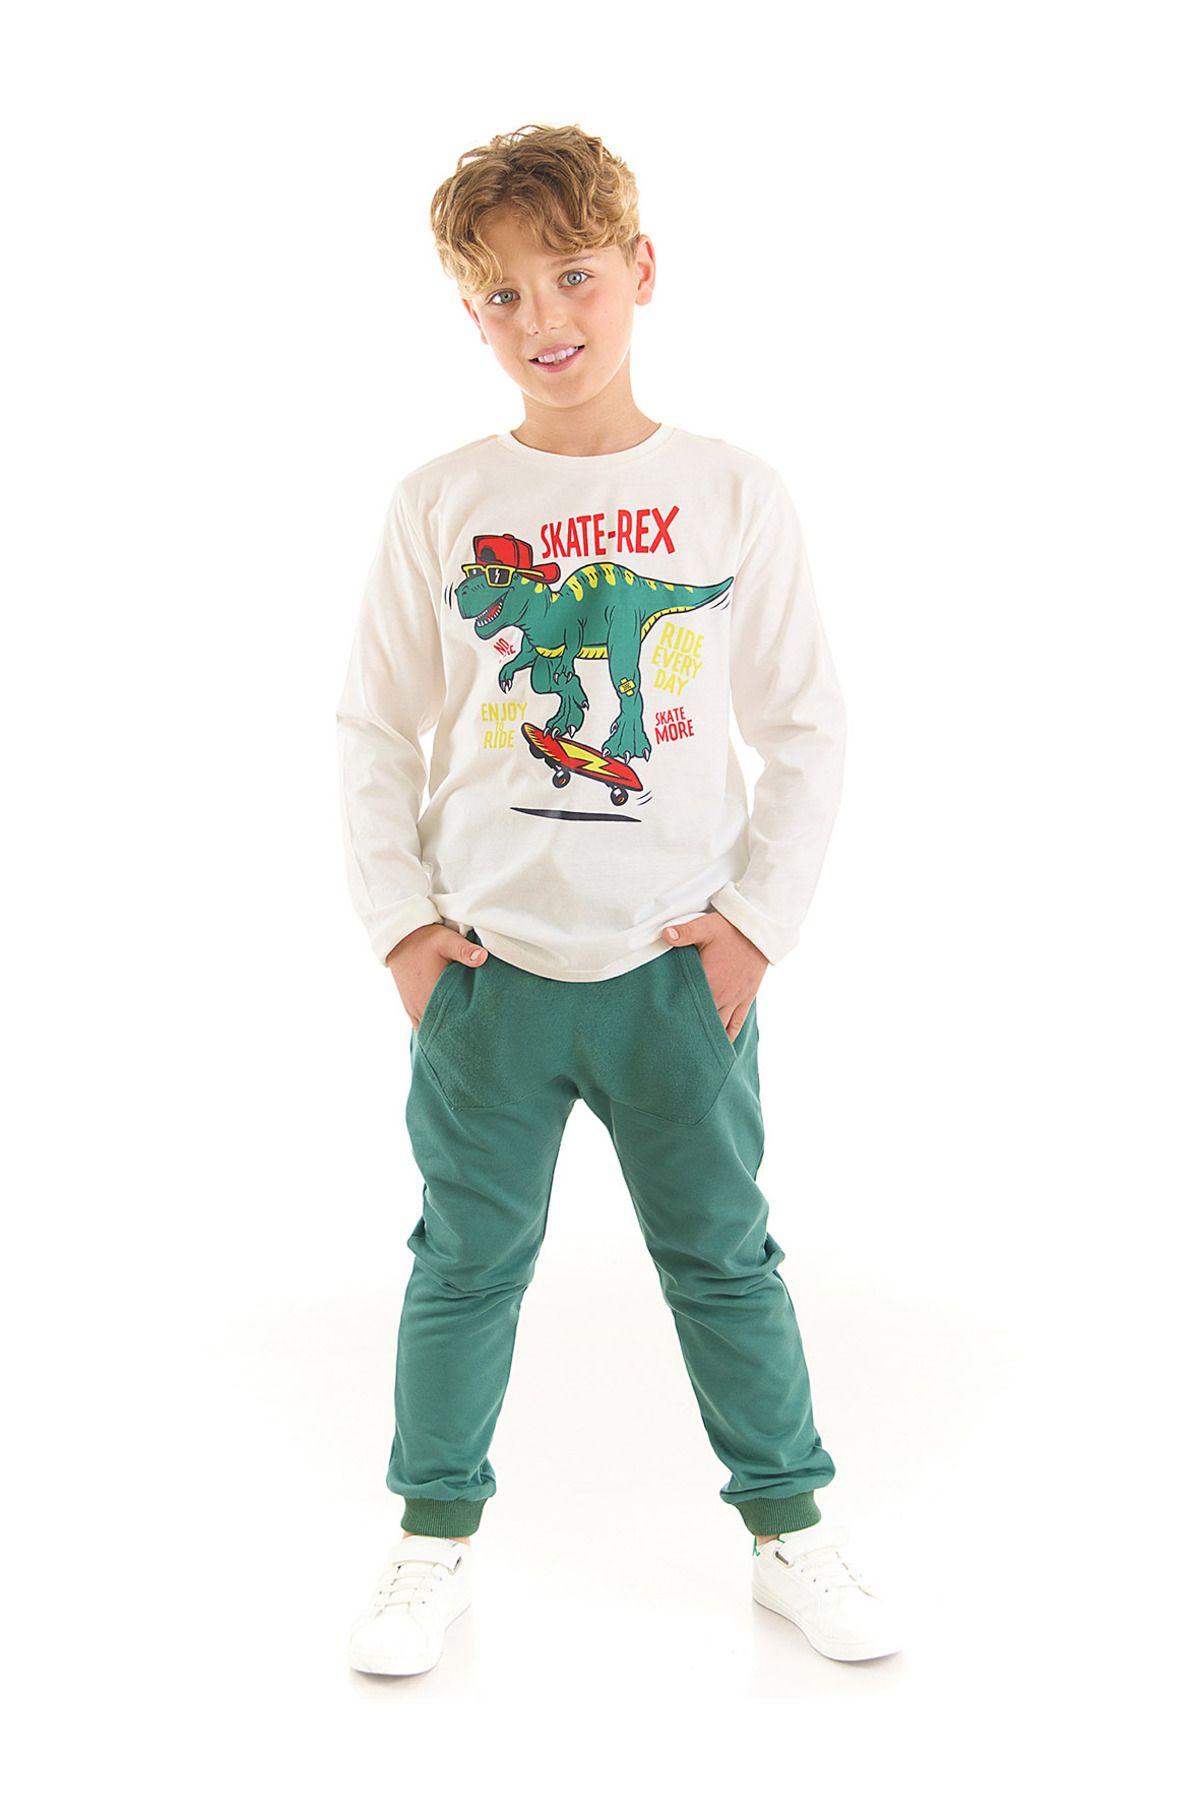 Denokids Skate-rex Erkek Çocuk T-shirt Pantolon Takım